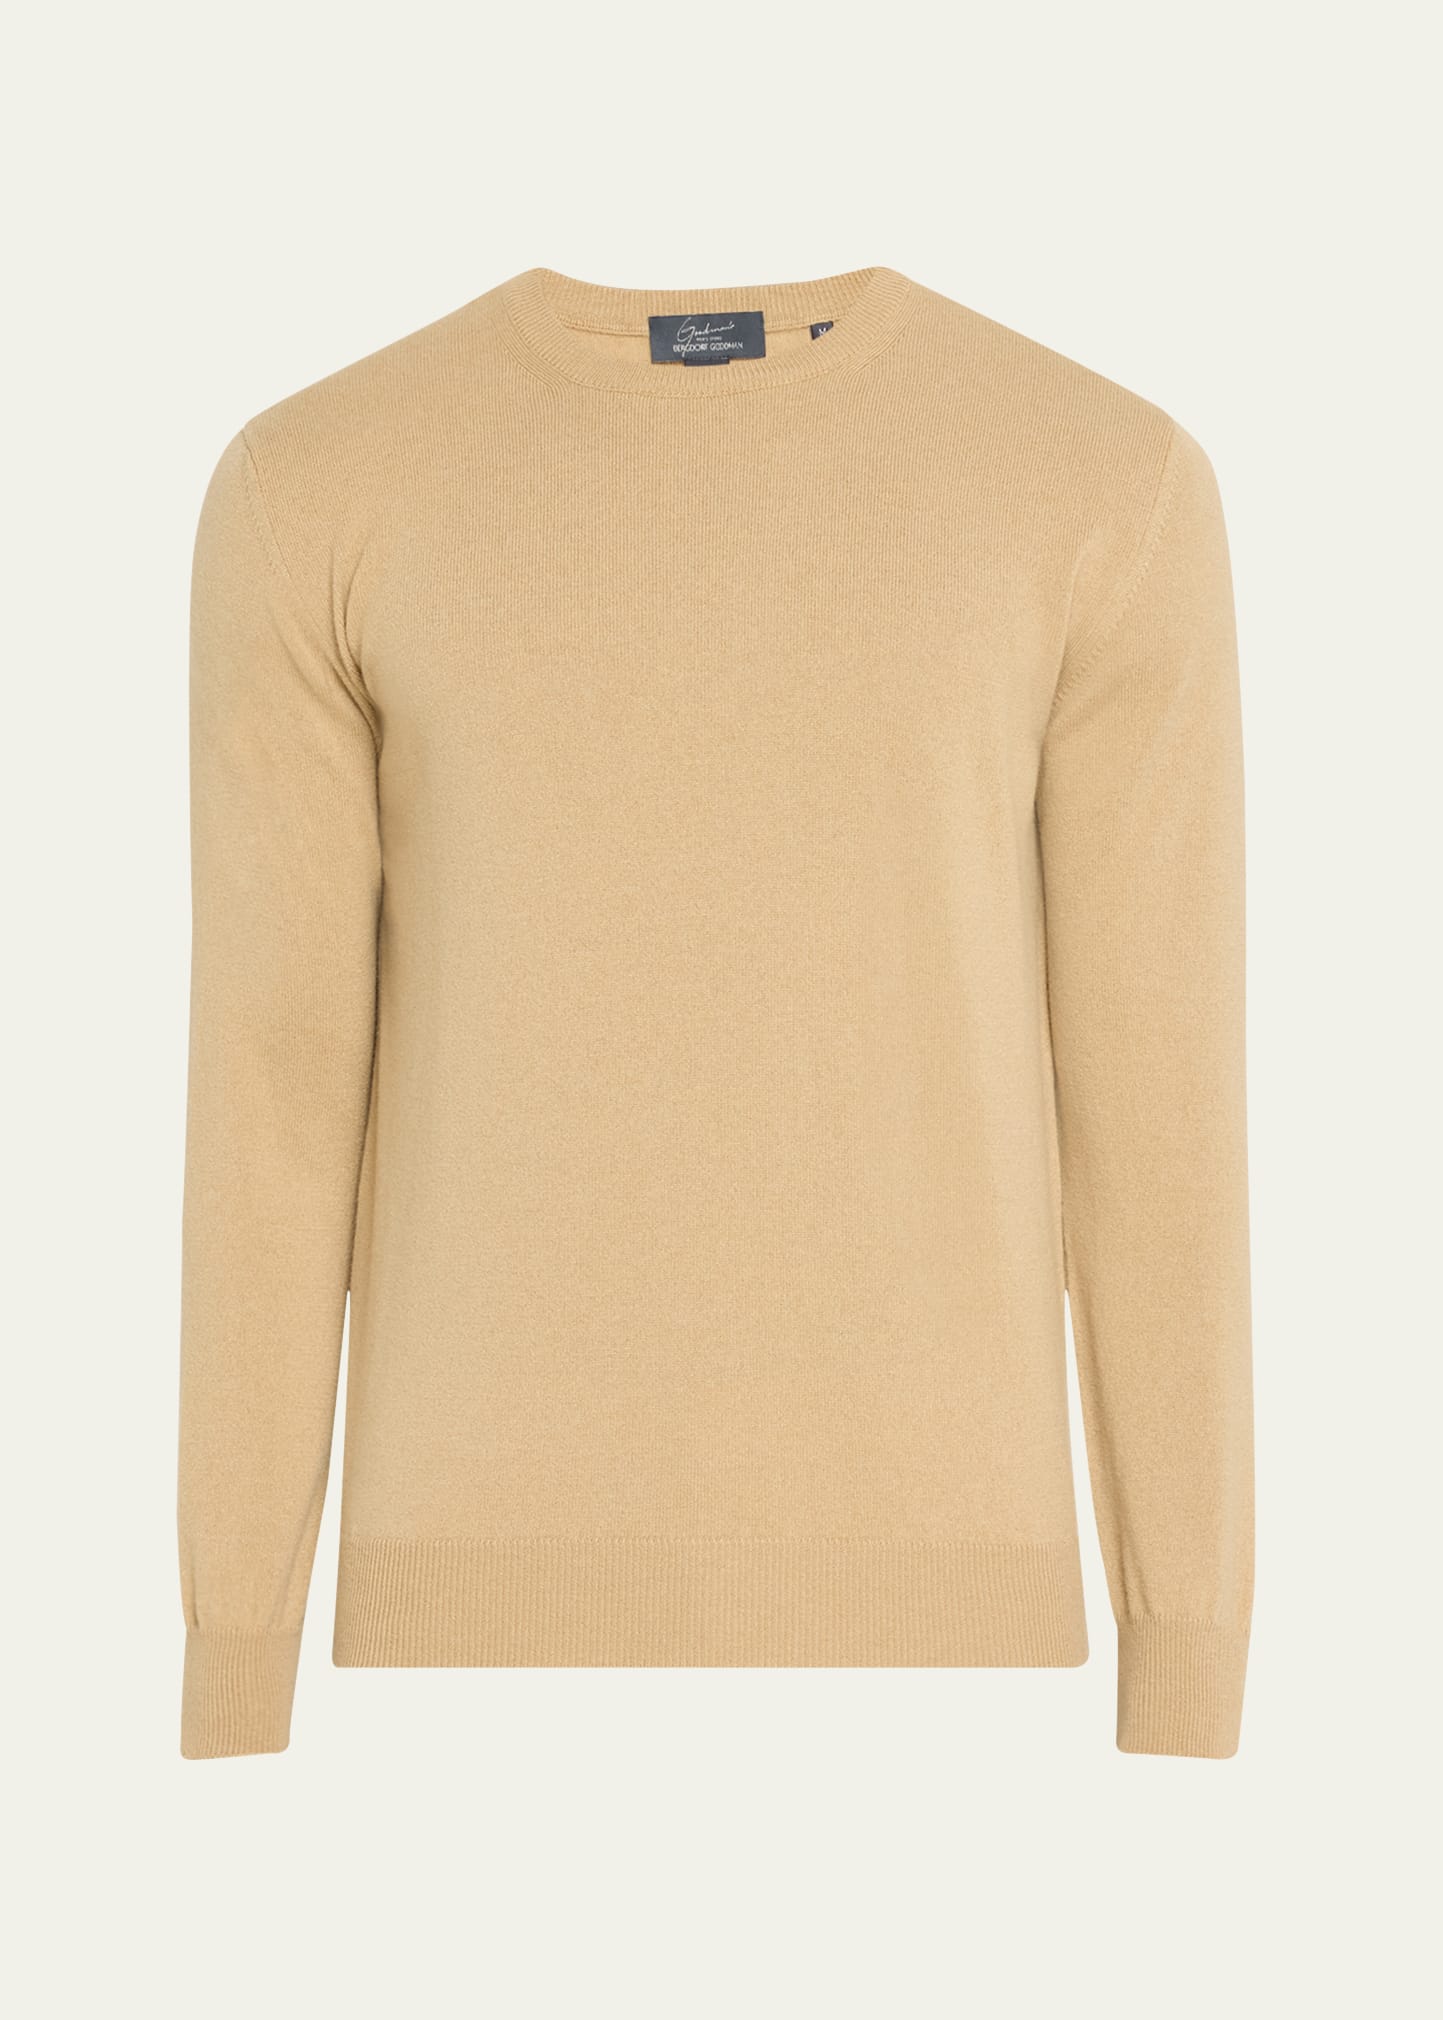 Men's Solid Cashmere Crewneck Sweater